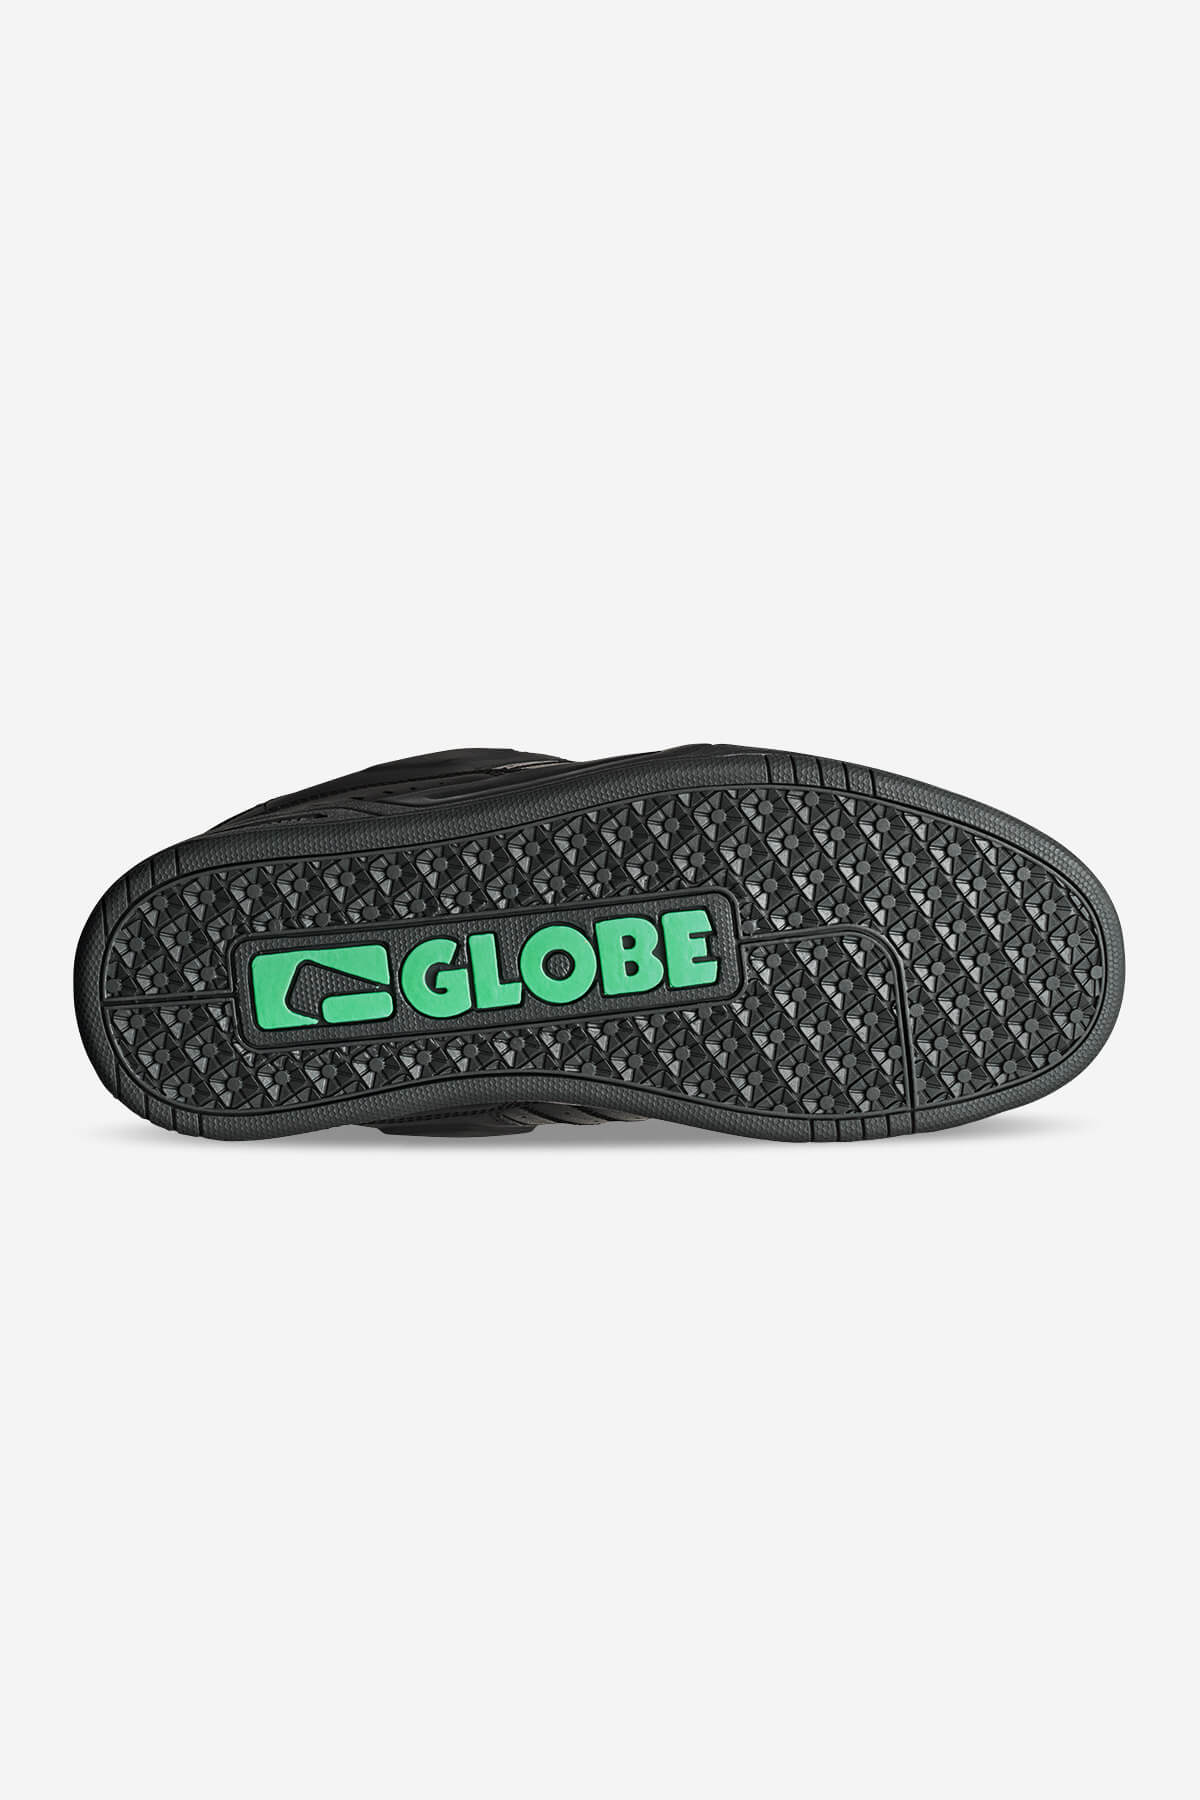 Globe - Fusion - Phantom Dip - skateboard Zapatos